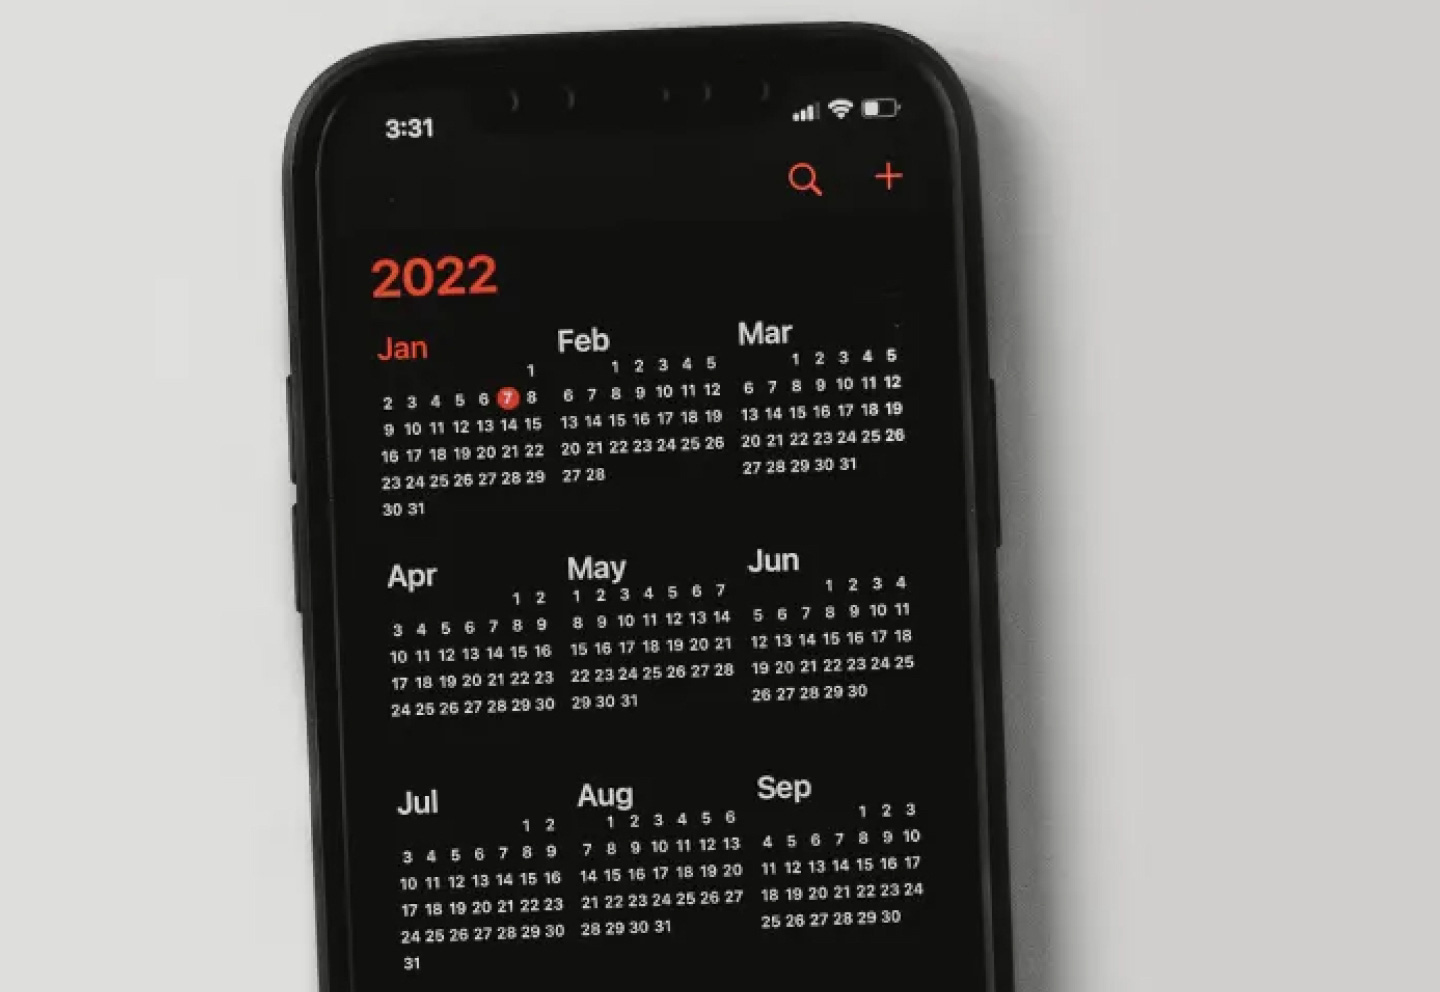 iPhone calendar